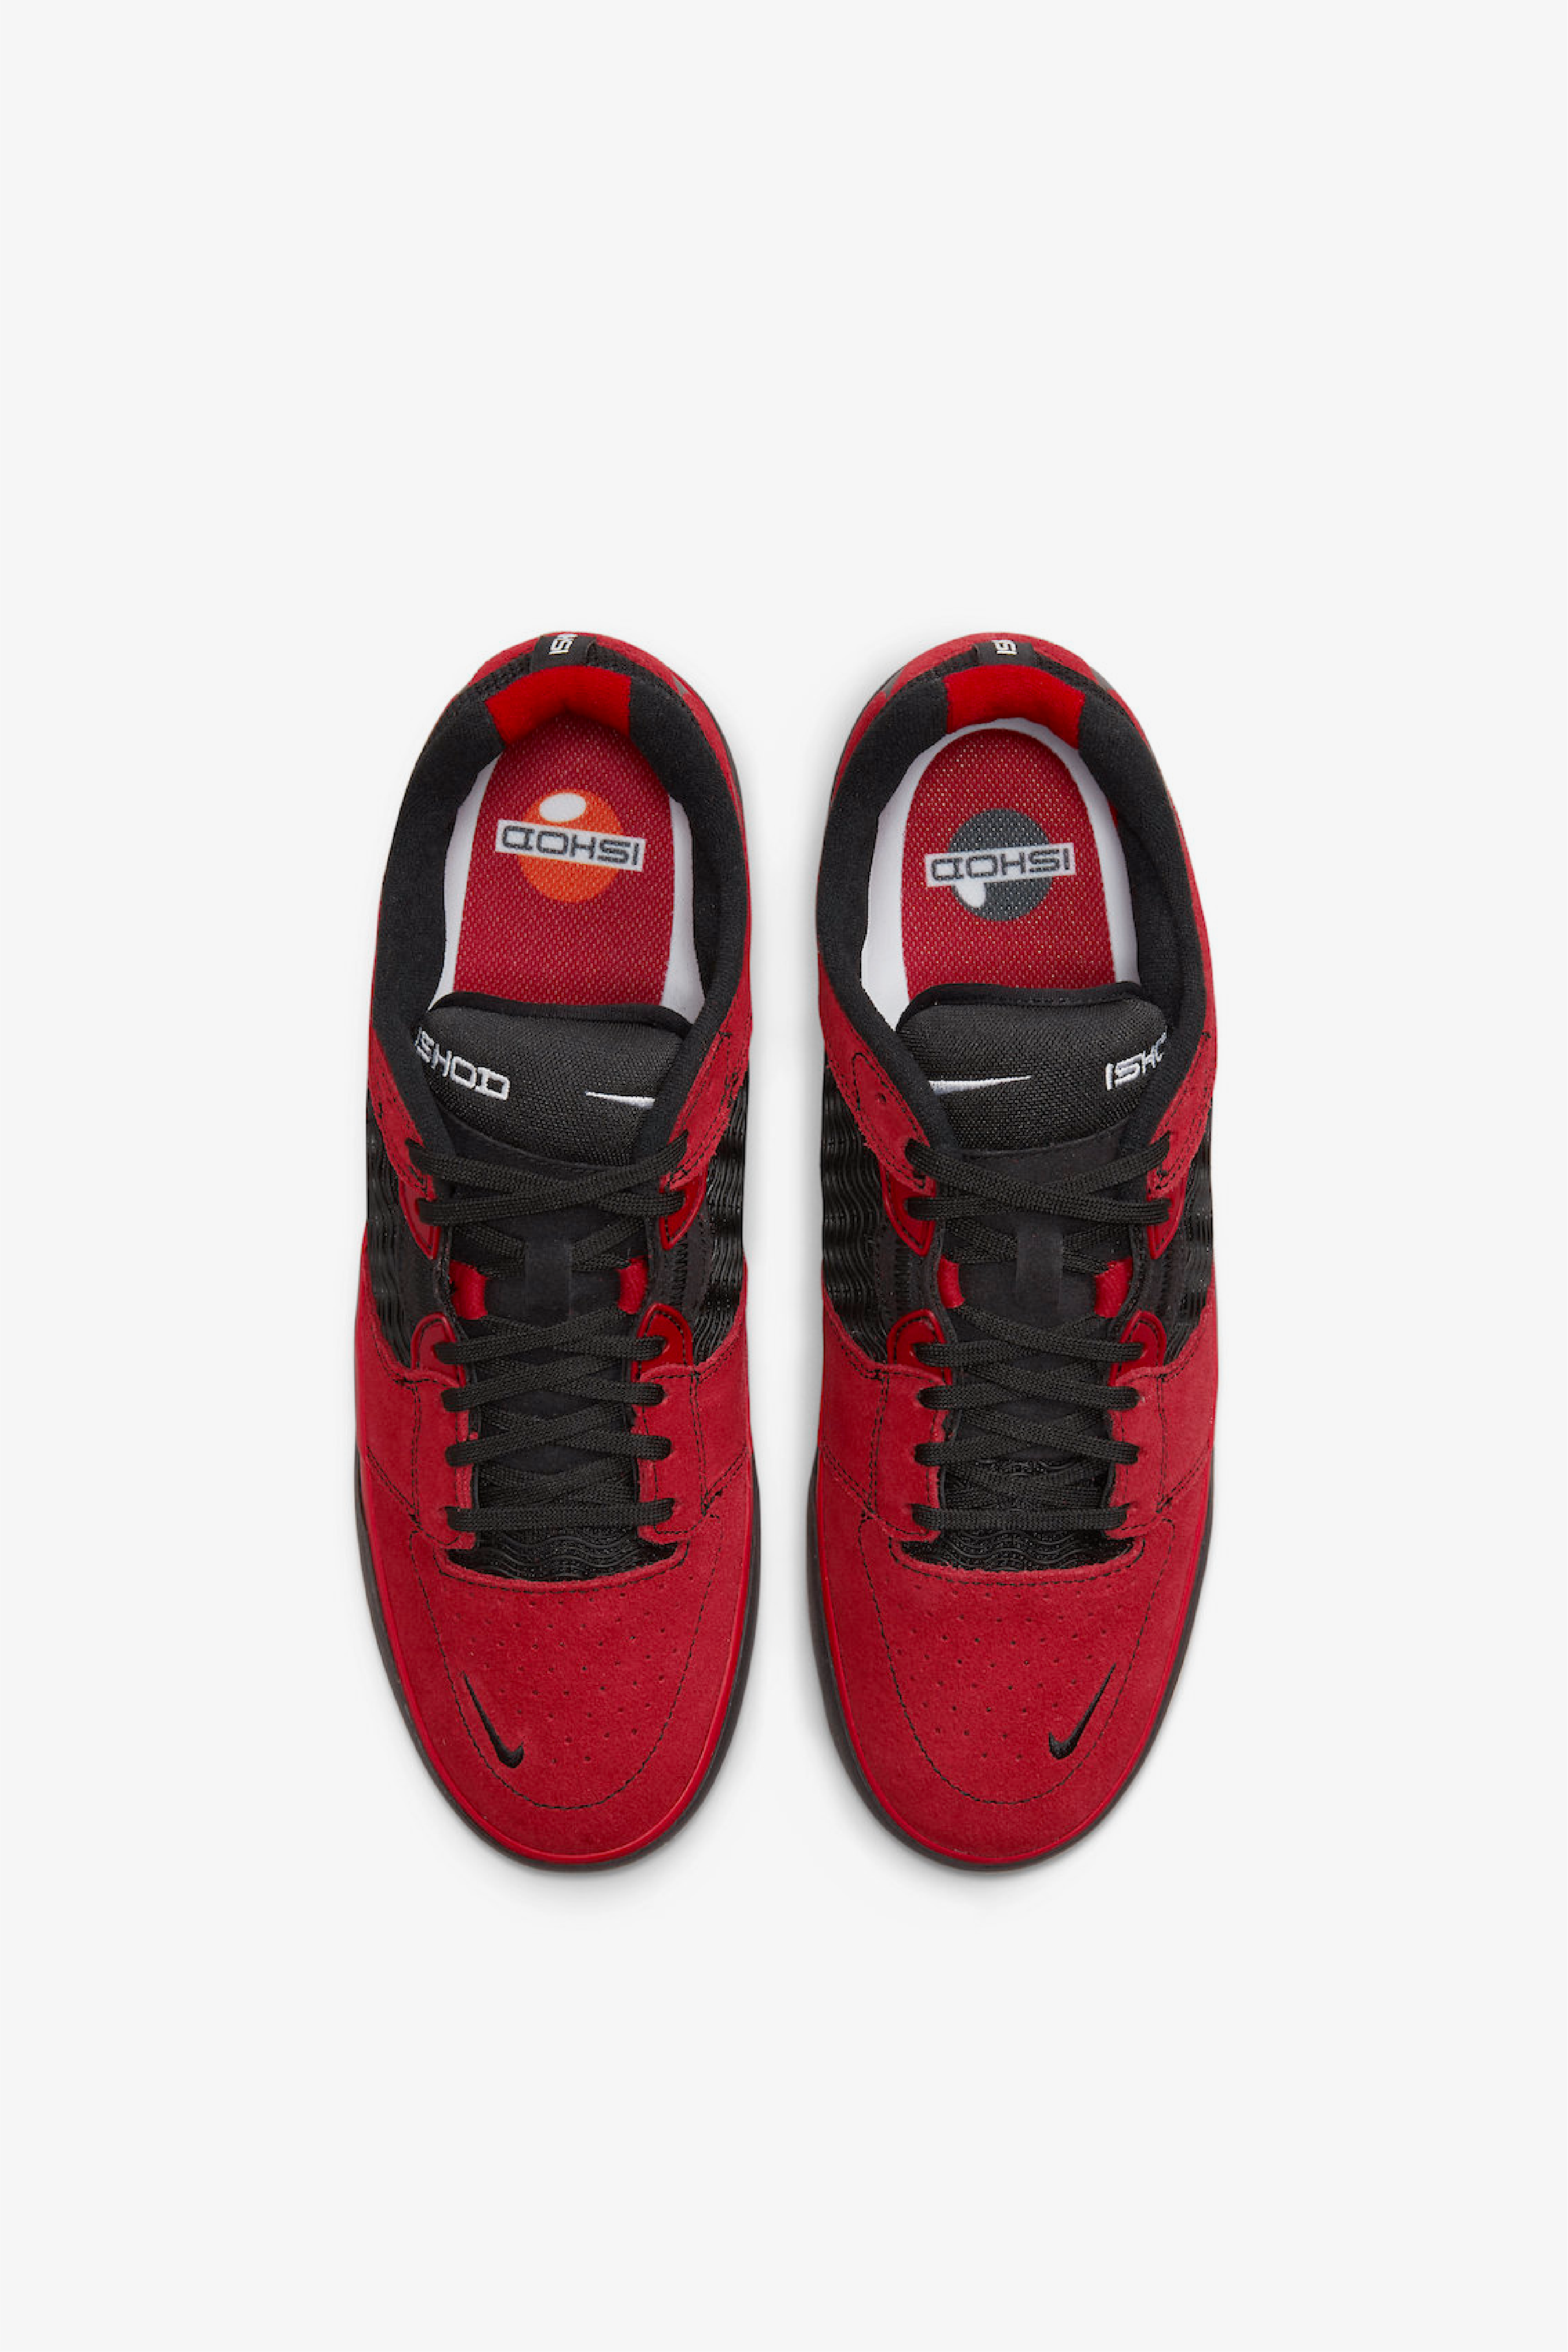 Selectshop FRAME - NIKE SB Nike SB Ishod  "Varsity Red" Footwear Dubai